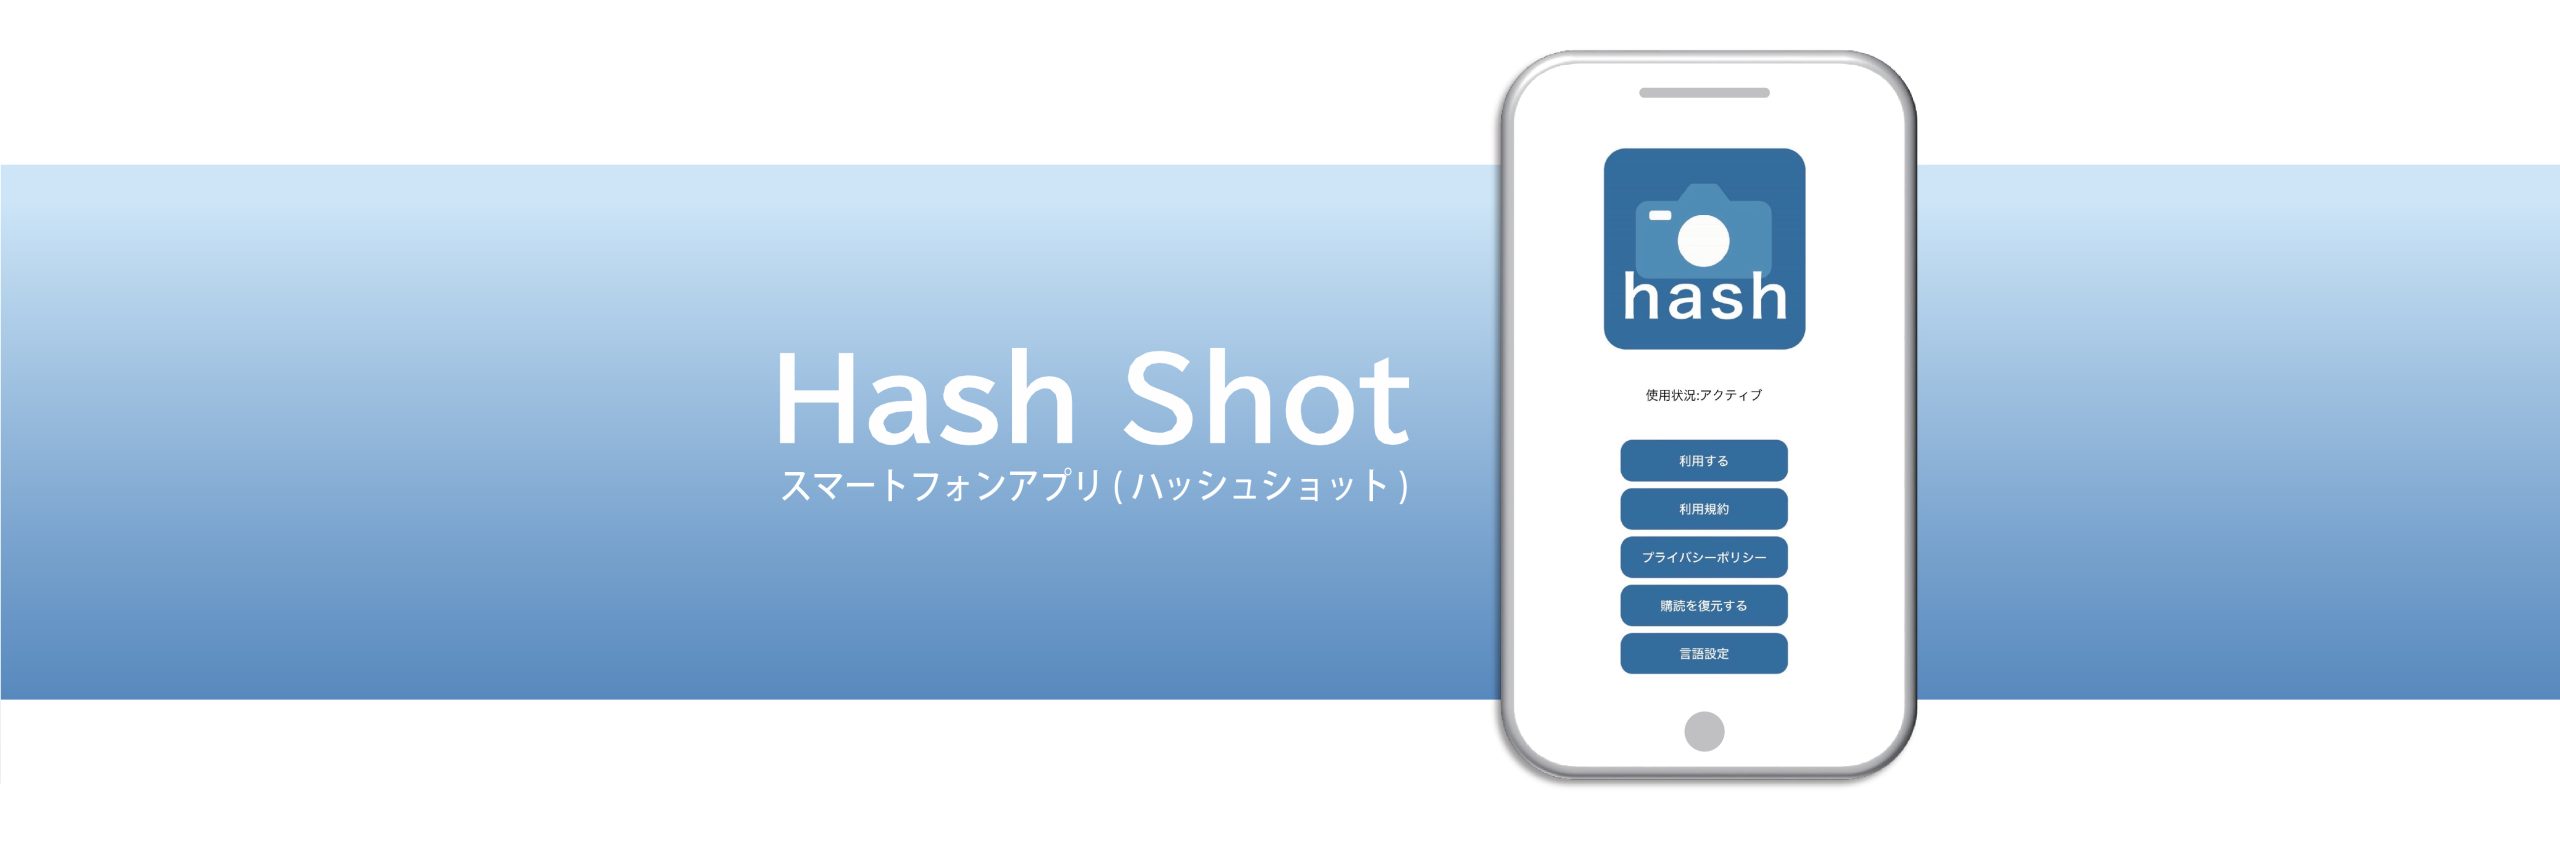 Hash Shot スマートフォンアプリ(ハッシュショット)